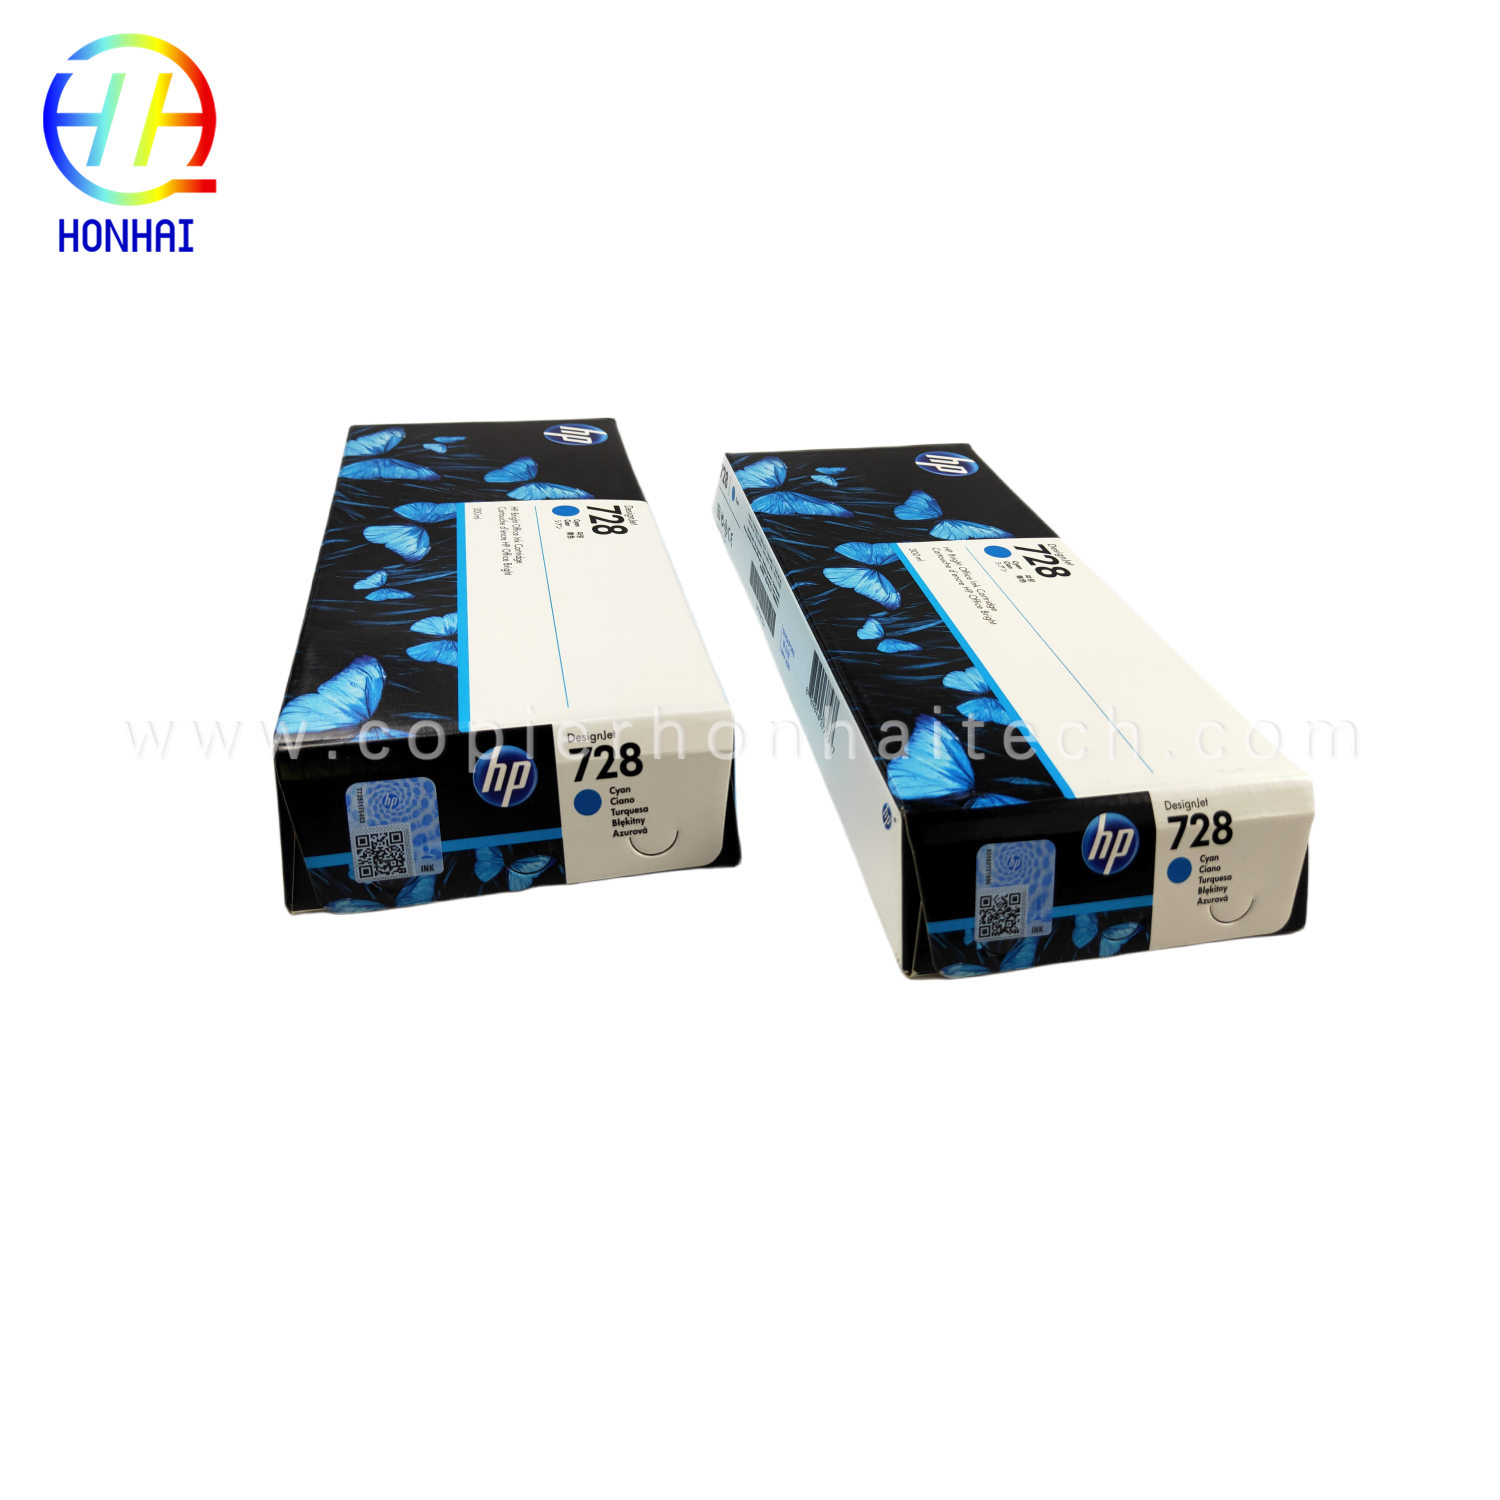 https://www.copierhonhaitech.com/original-new-ink-cartridge-chan-for-hp-designjet-t730-and-t830-large-format-plotter-printers-and-hp-729-designjet-printhead- 728-f9k17a-製品/